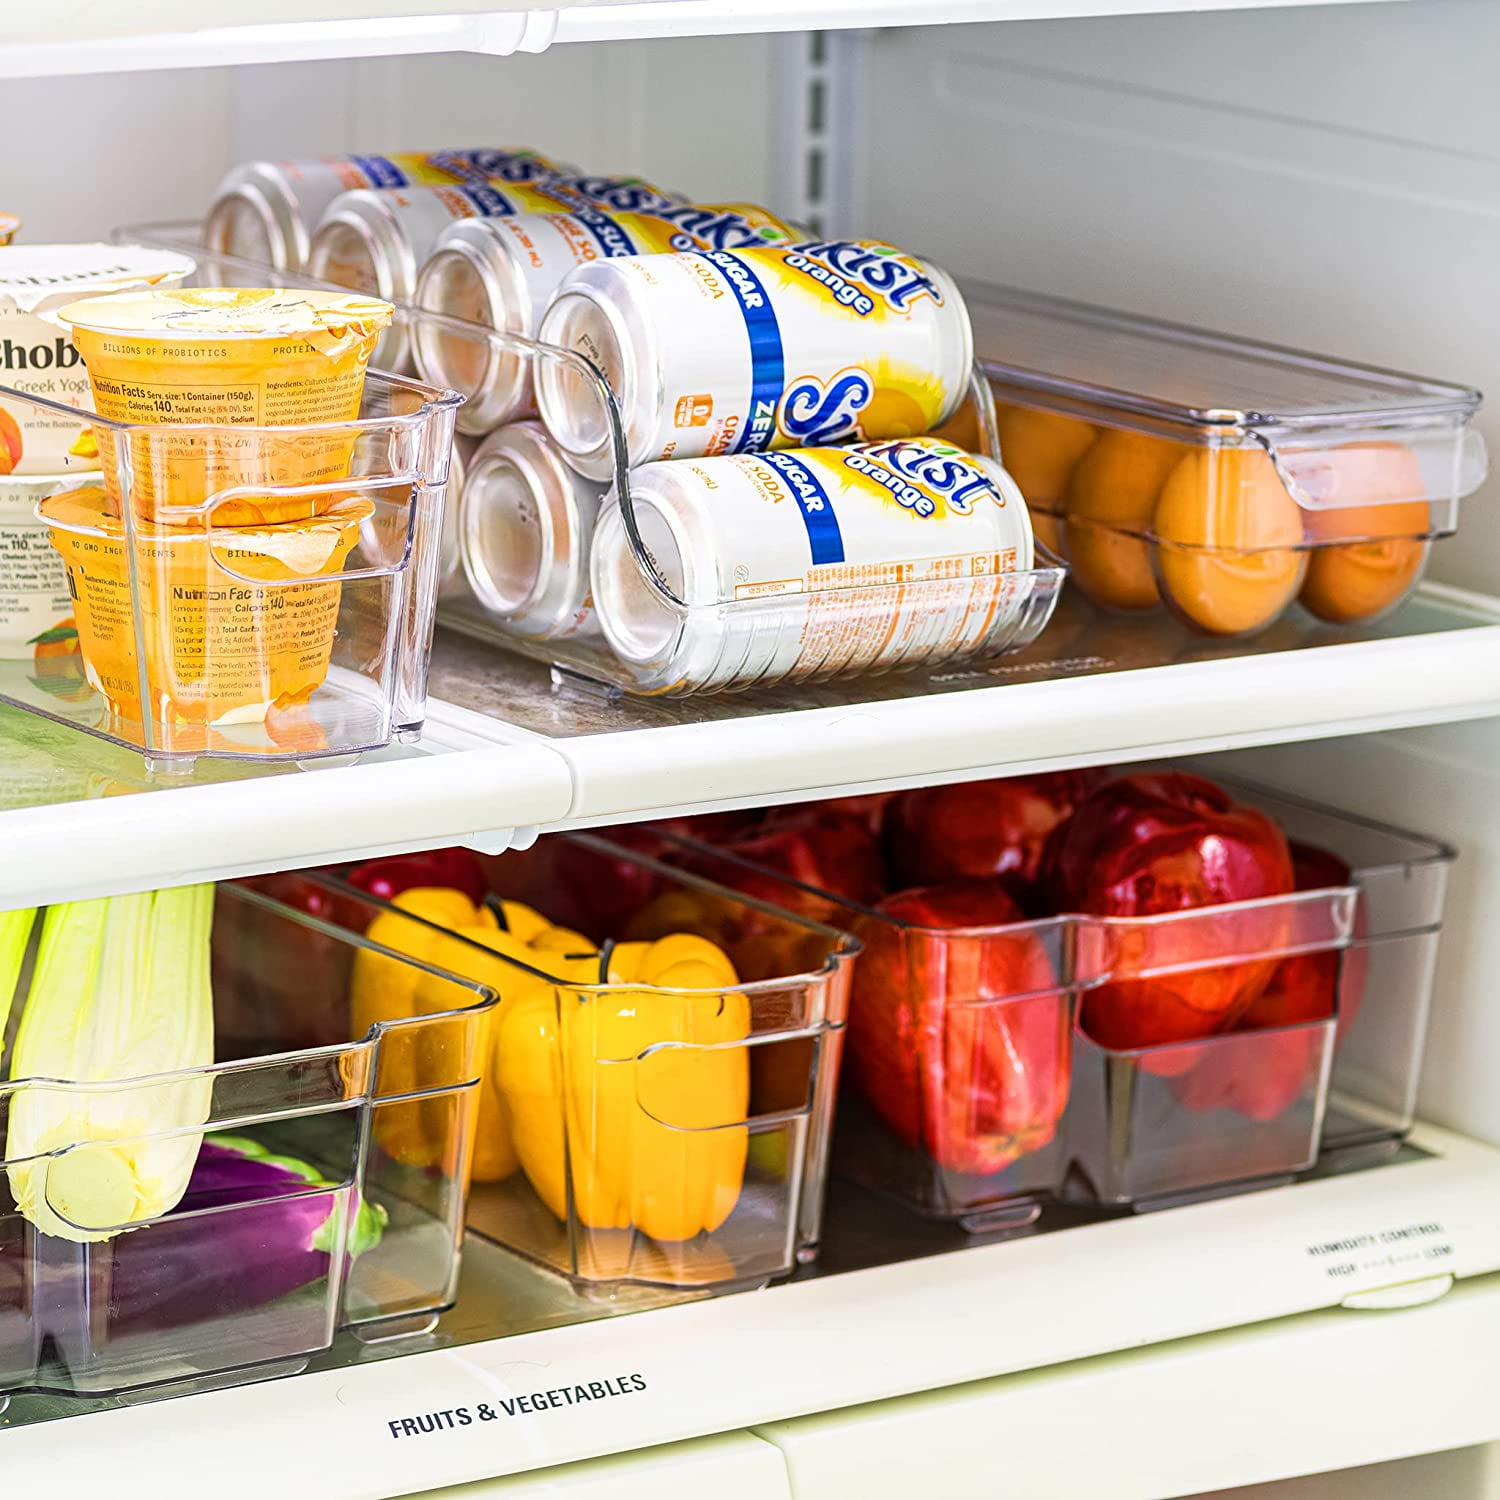 14 PC Refrigerator Organizer Set Clear Storage Bins for Fridge Freezer &  Pantry